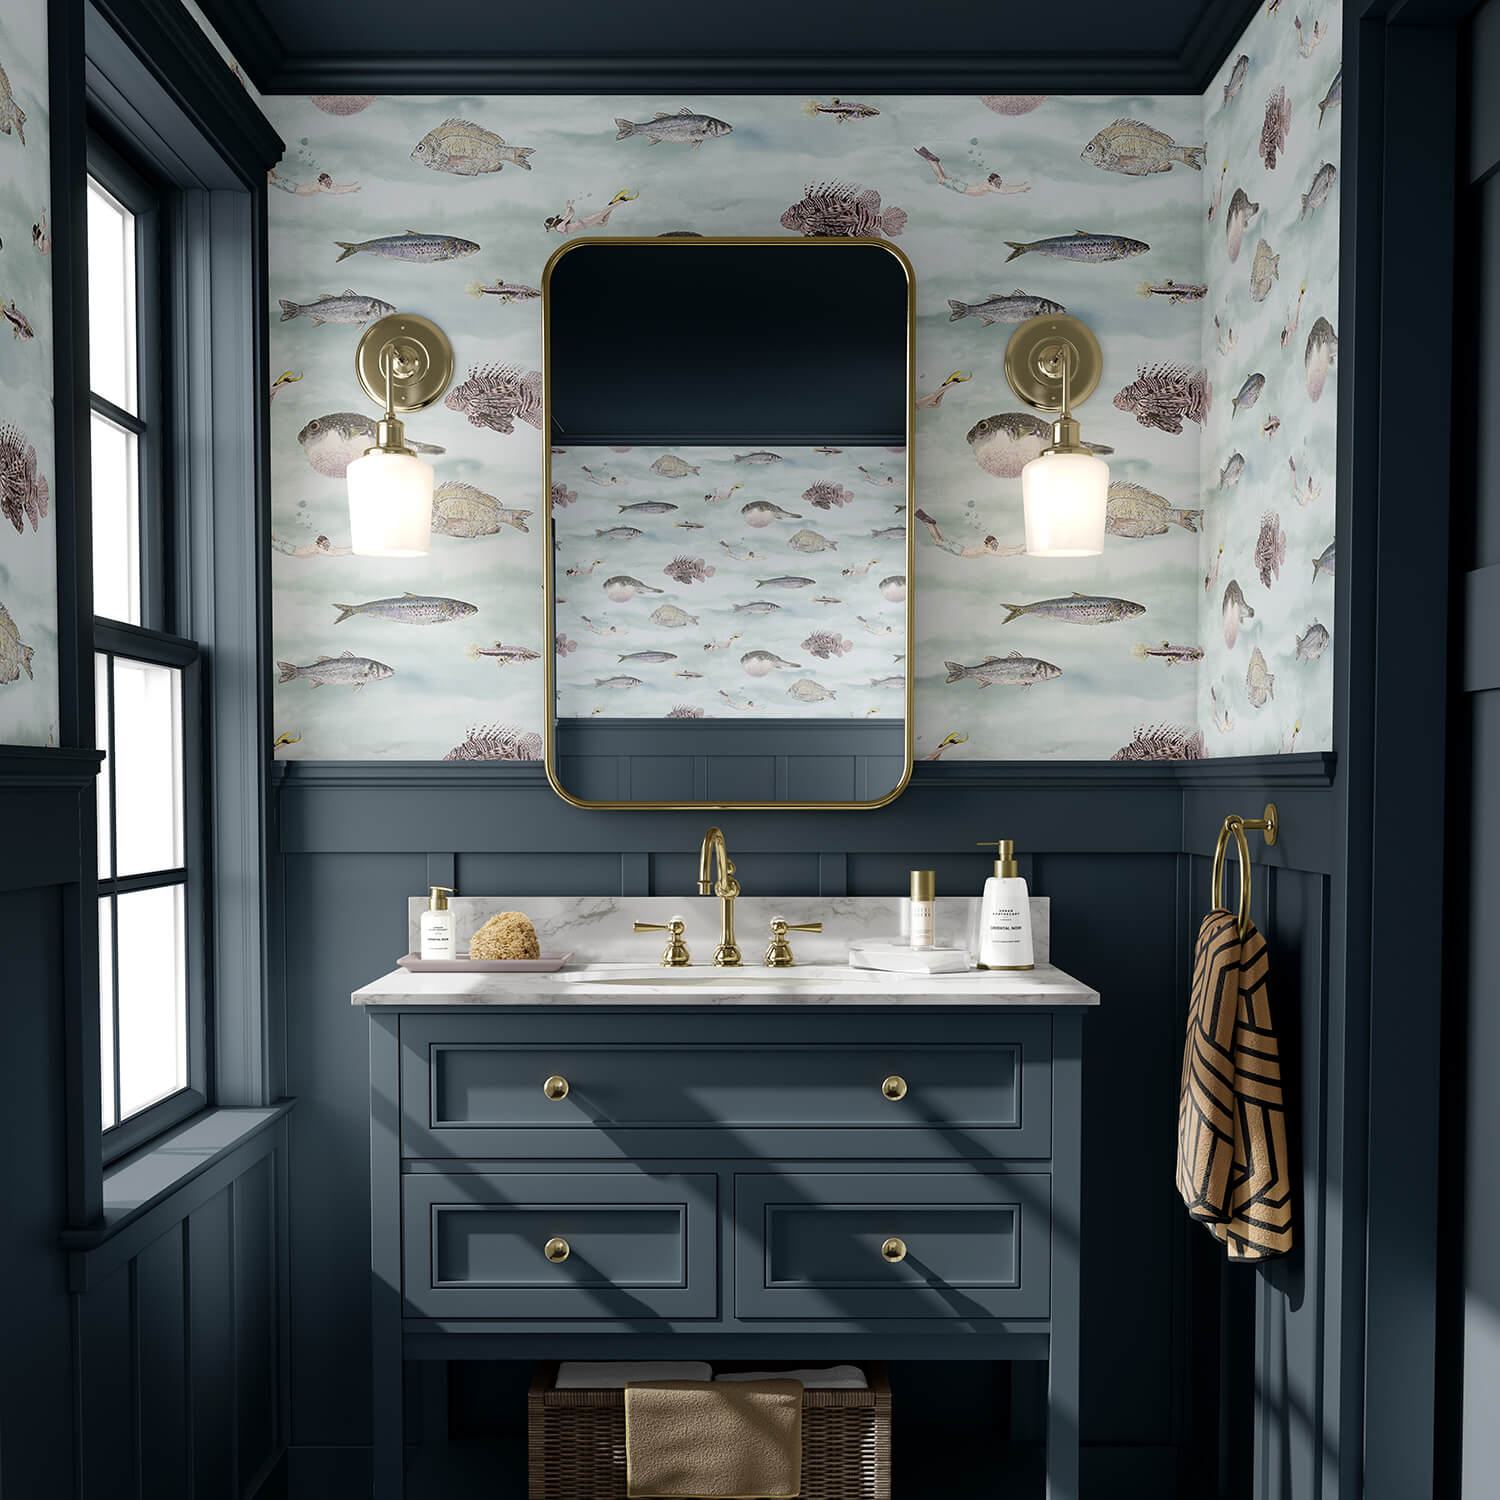 Koi carp wallpaper  Bathroom wallpaper fish Vintage bathroom tile Small  bathroom decor